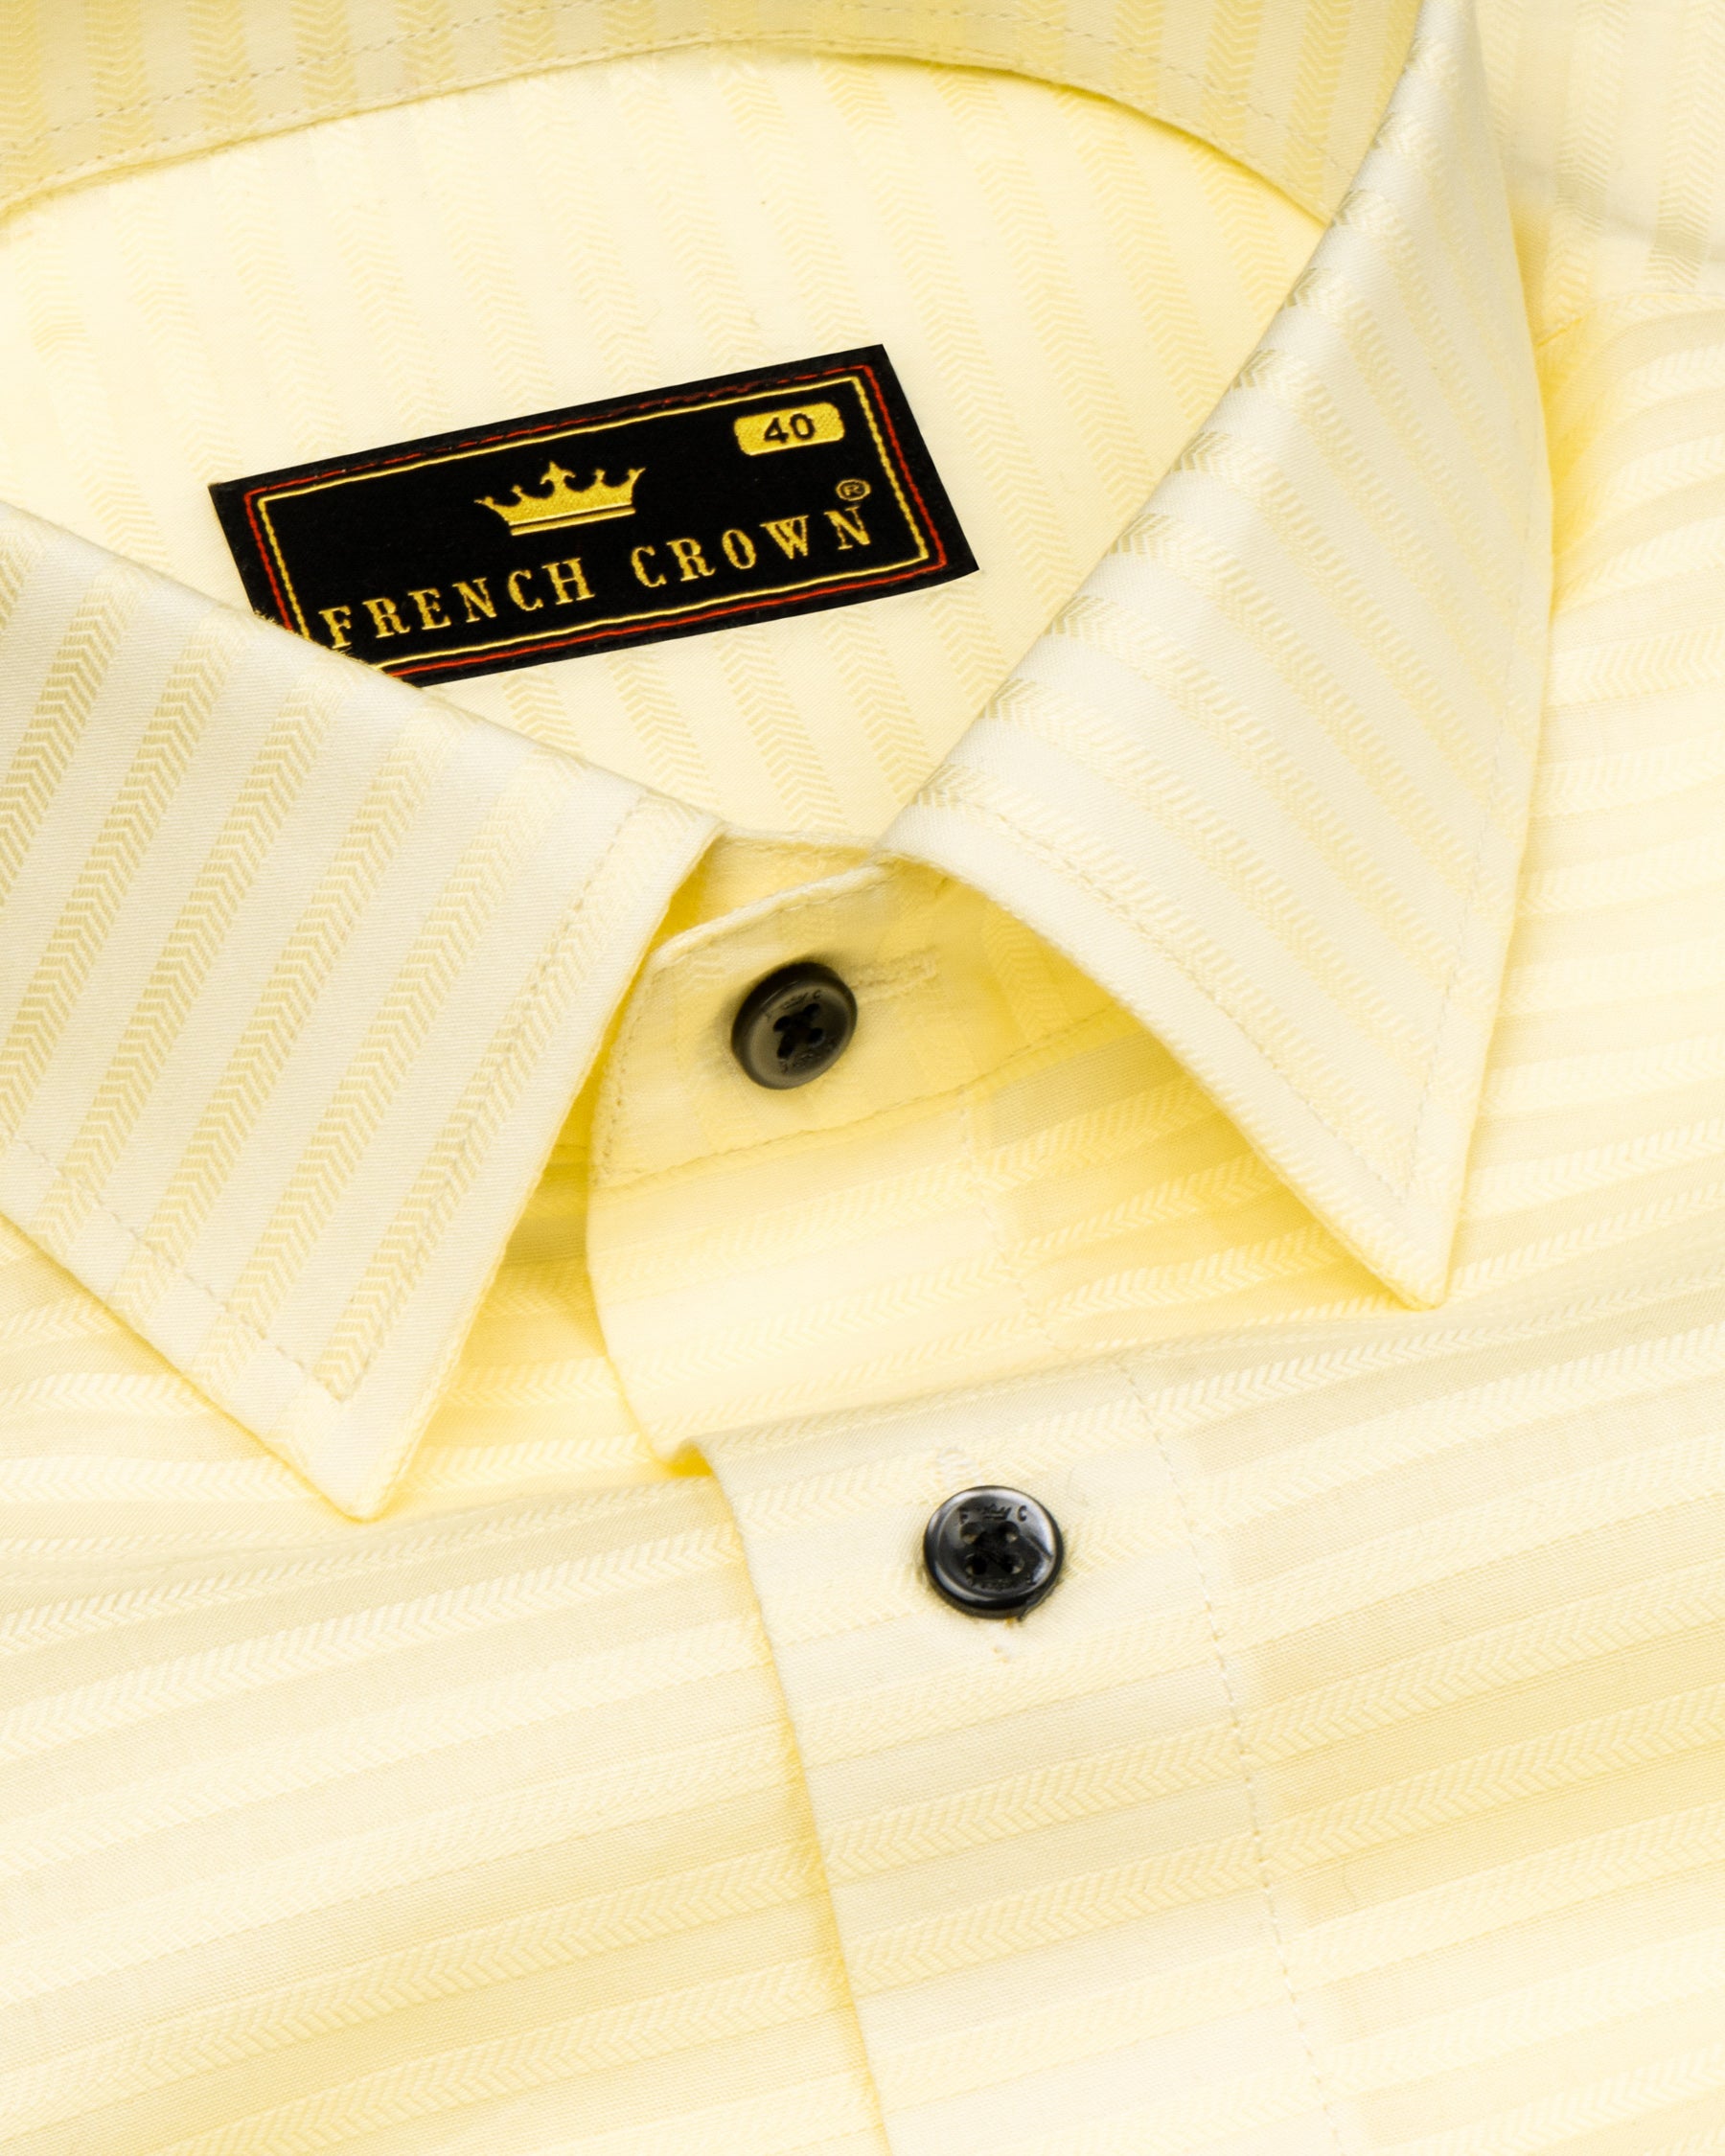 Varden Yellow Subtle Striped Dobby Textured Premium Giza Cotton Shirt 4665-BLK-H-44, 4665-BLK-H-38, 4665-BLK-38, 4665-BLK-39, 4665-BLK-H-39, 4665-BLK-40, 4665-BLK-H-40, 4665-BLK-42, 4665-BLK-H-42, 4665-BLK-44, 4665-BLK-46, 4665-BLK-H-46, 4665-BLK-48, 4665-BLK-H-48, 4665-BLK-50, 4665-BLK-H-50, 4665-BLK-52, 4665-BLK-H-52